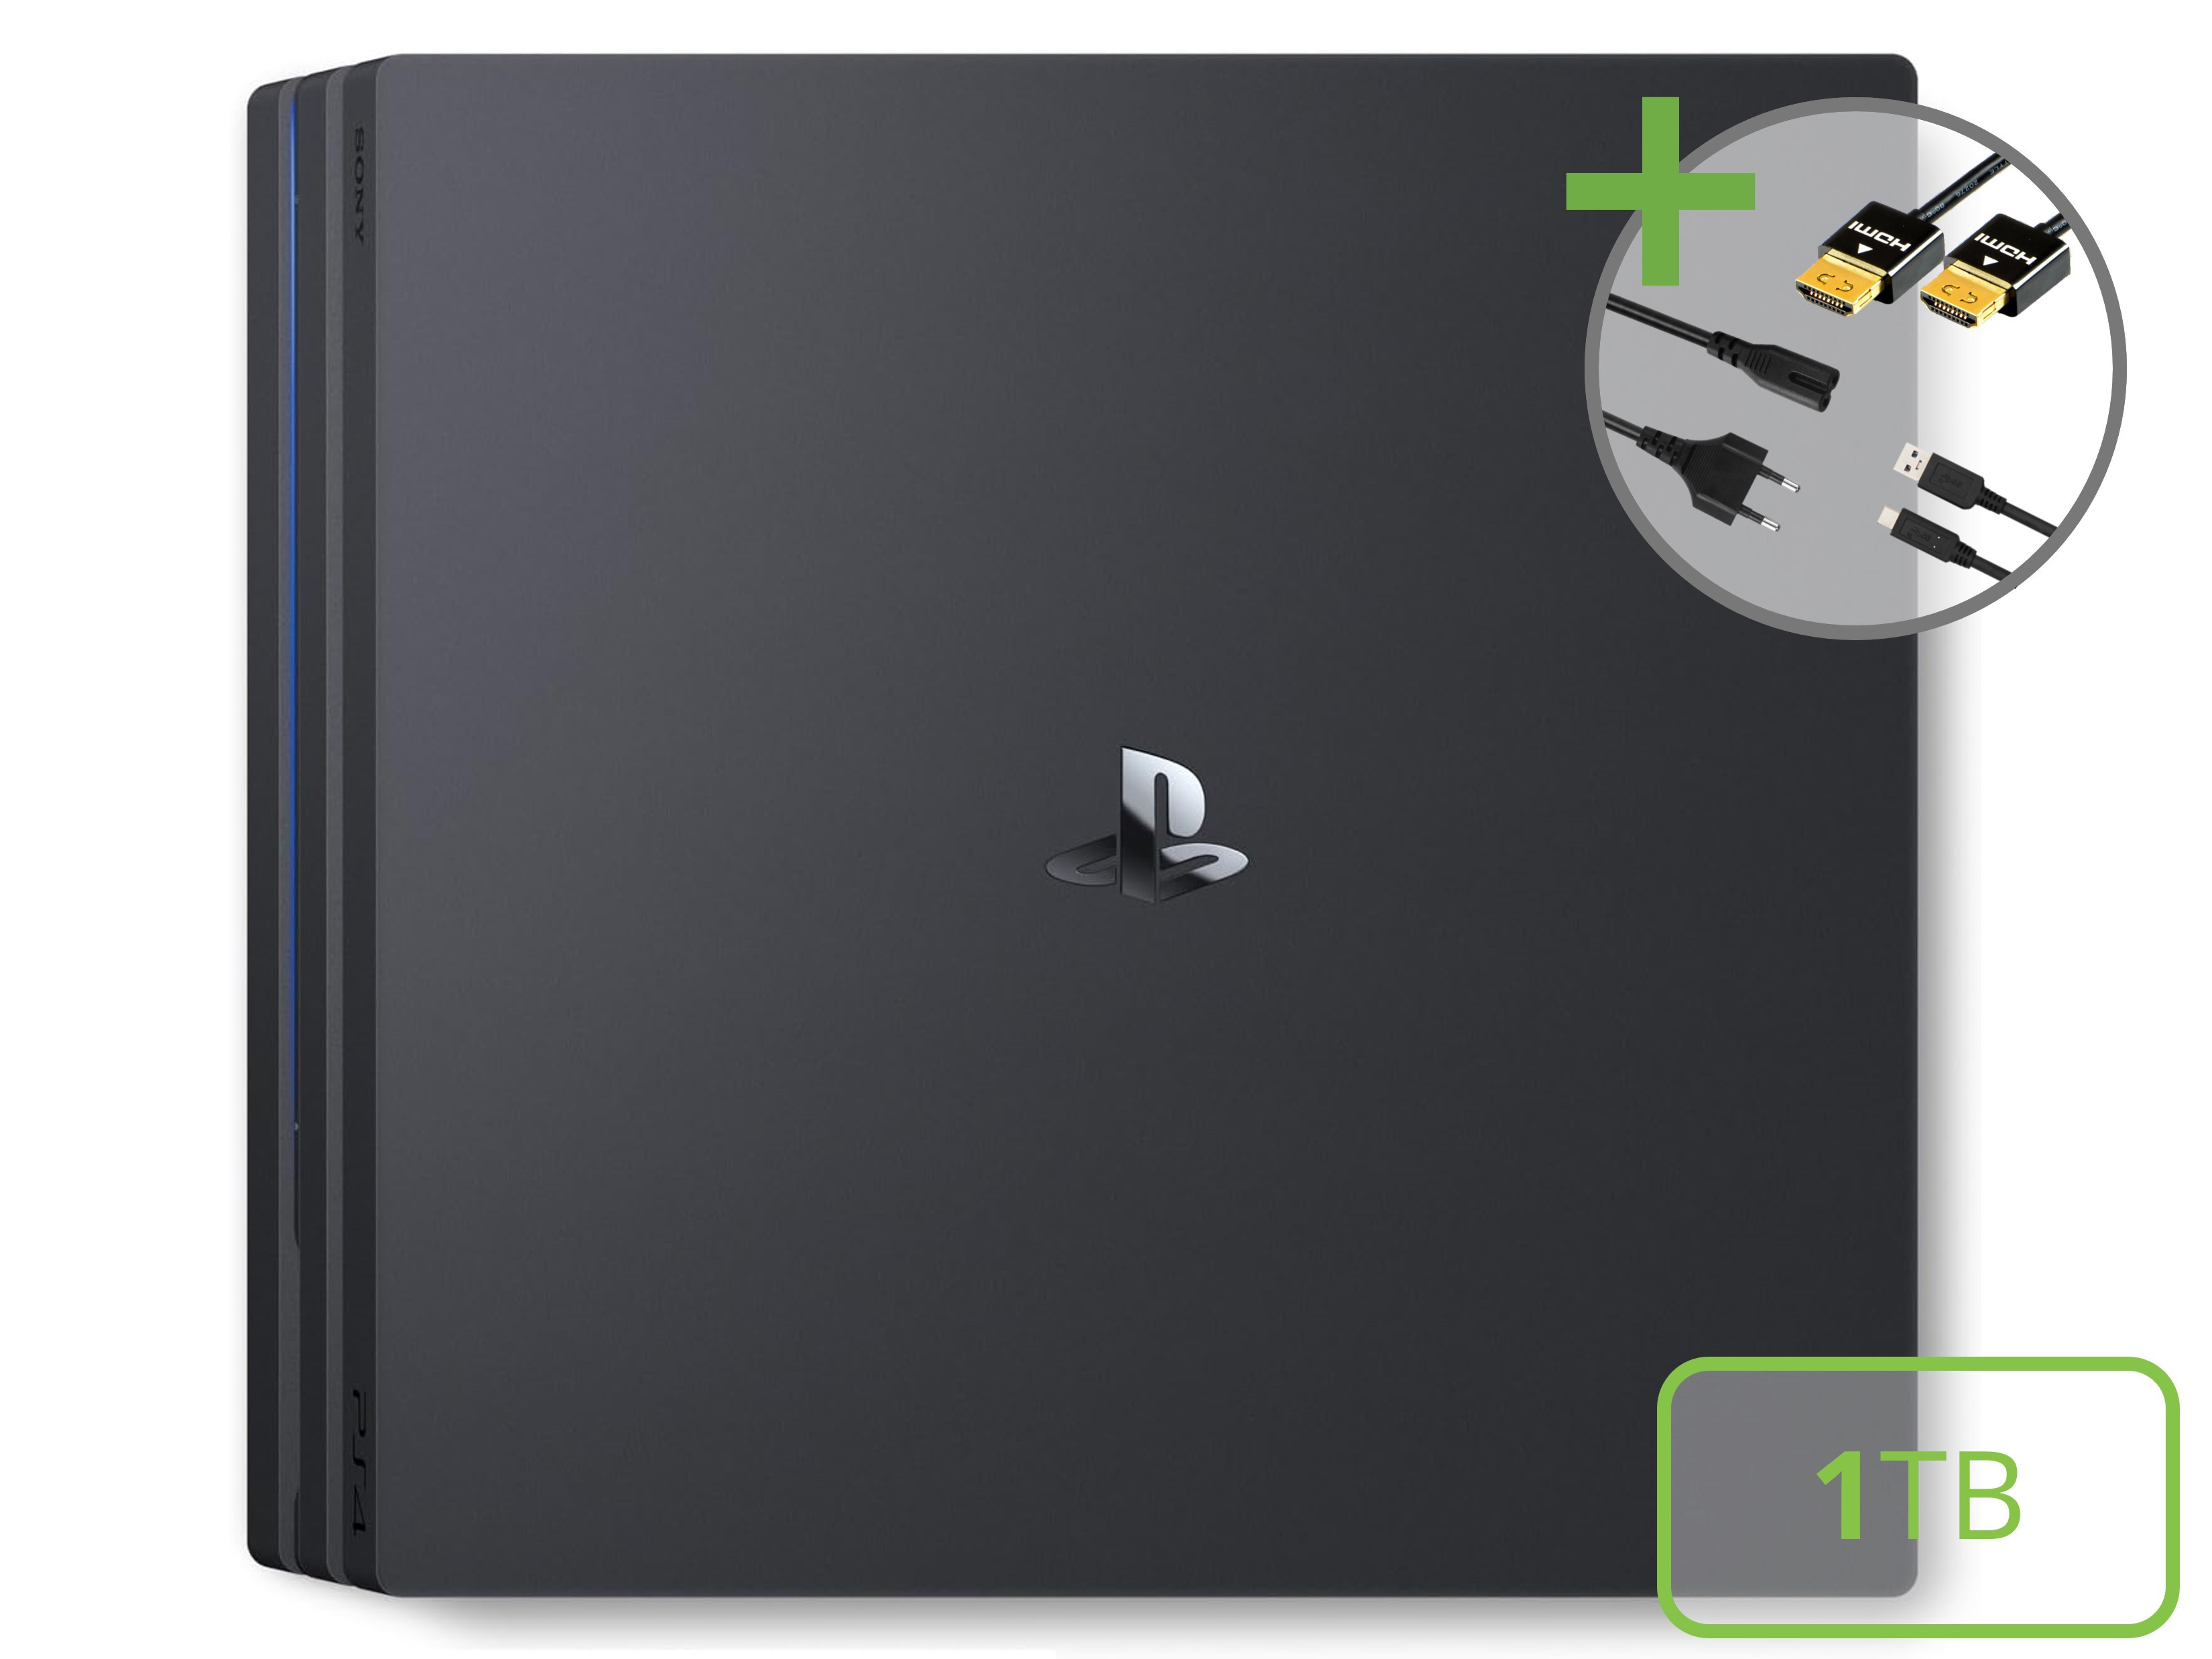 Sony PlayStation 4 Pro Starter Pack - 1TB Grand Theft Auto V Edition - Playstation 4 Hardware - 3